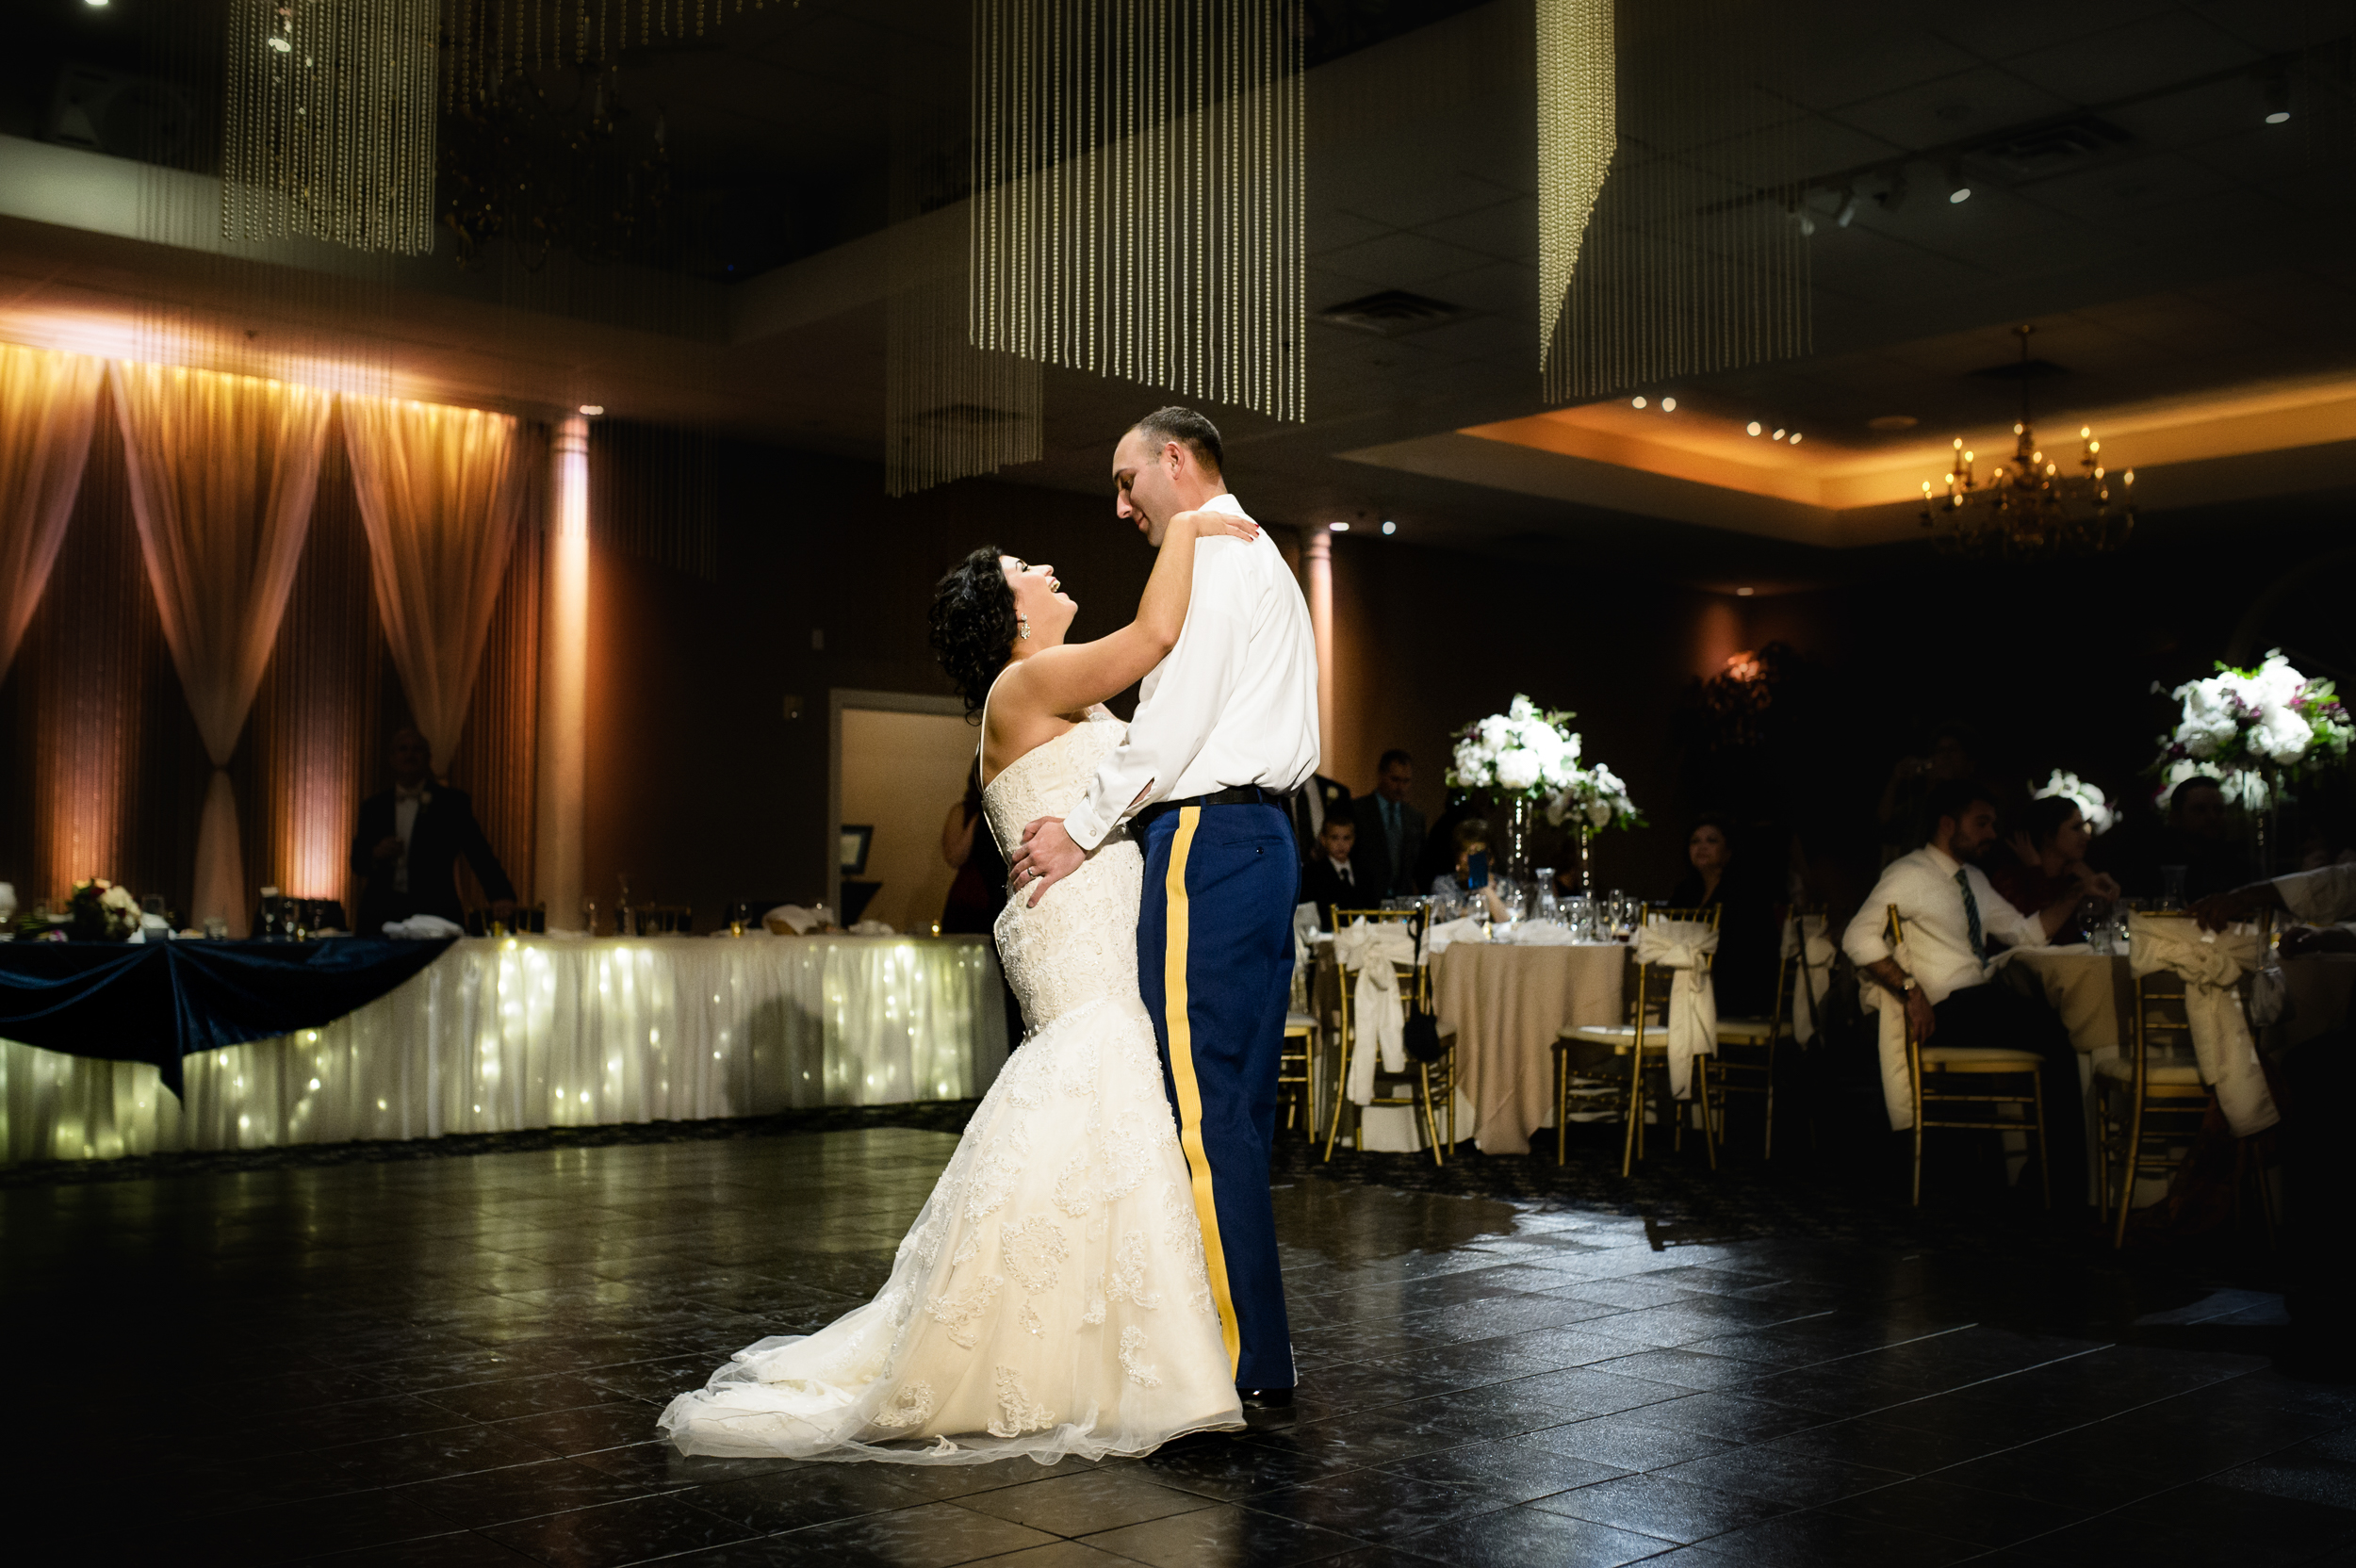 Aberdeen Manor Wedding Venue - Northwest Indiana Wedding Photographer Region Weddings